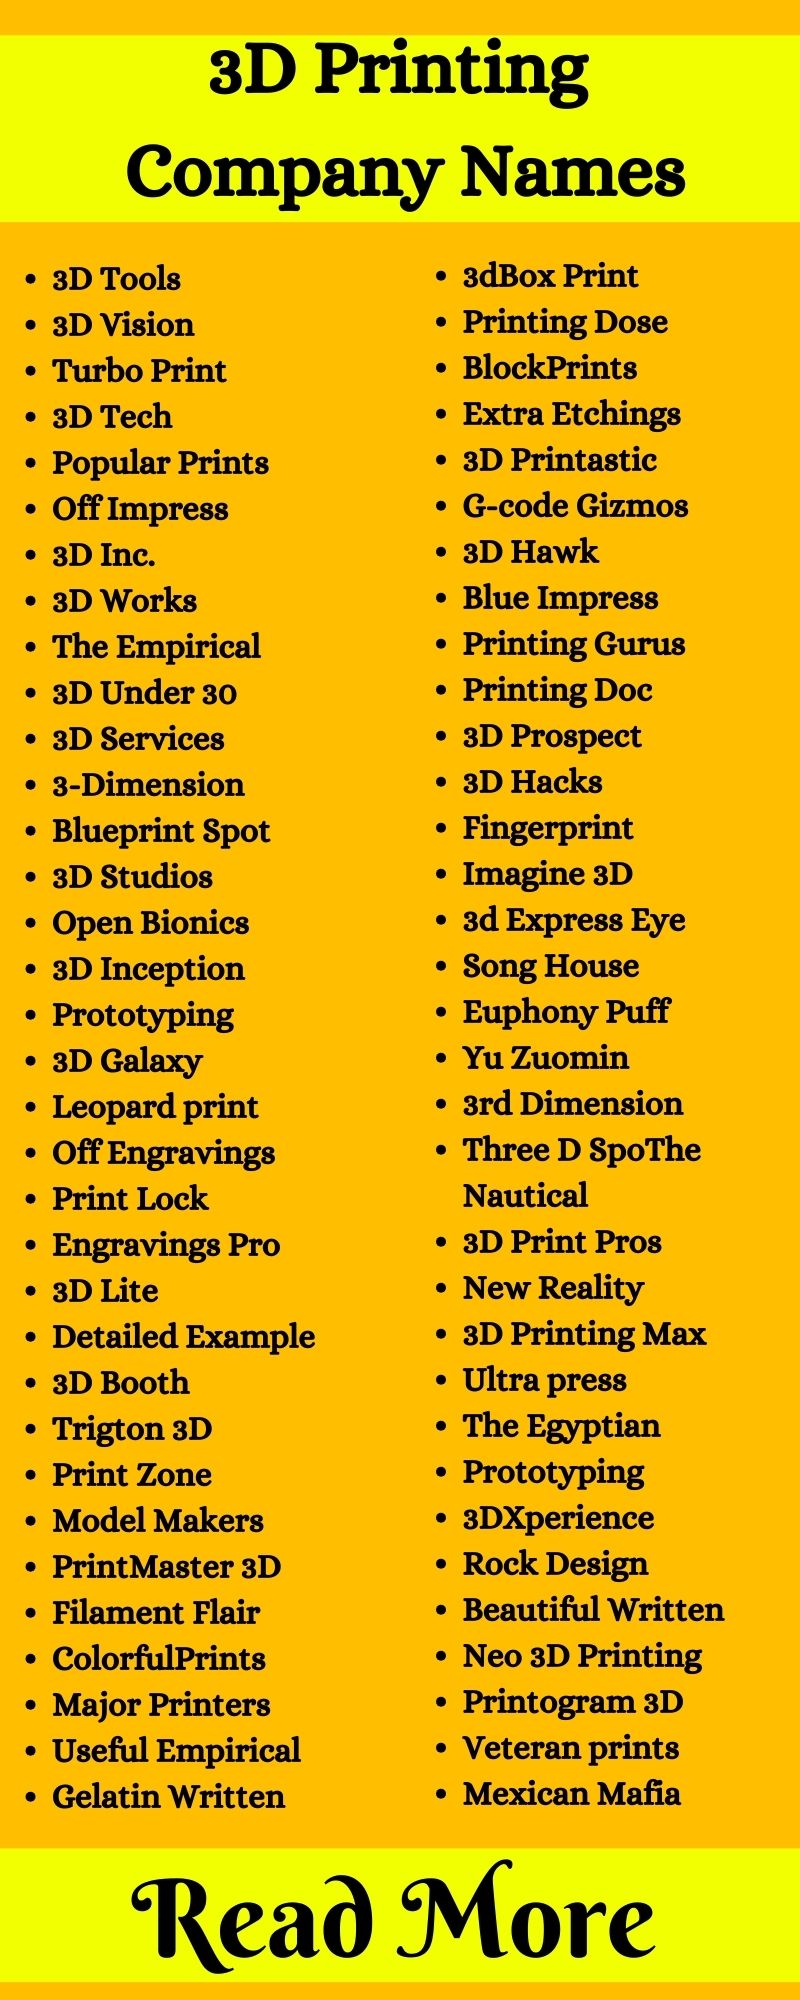 3D Printing Company Names1